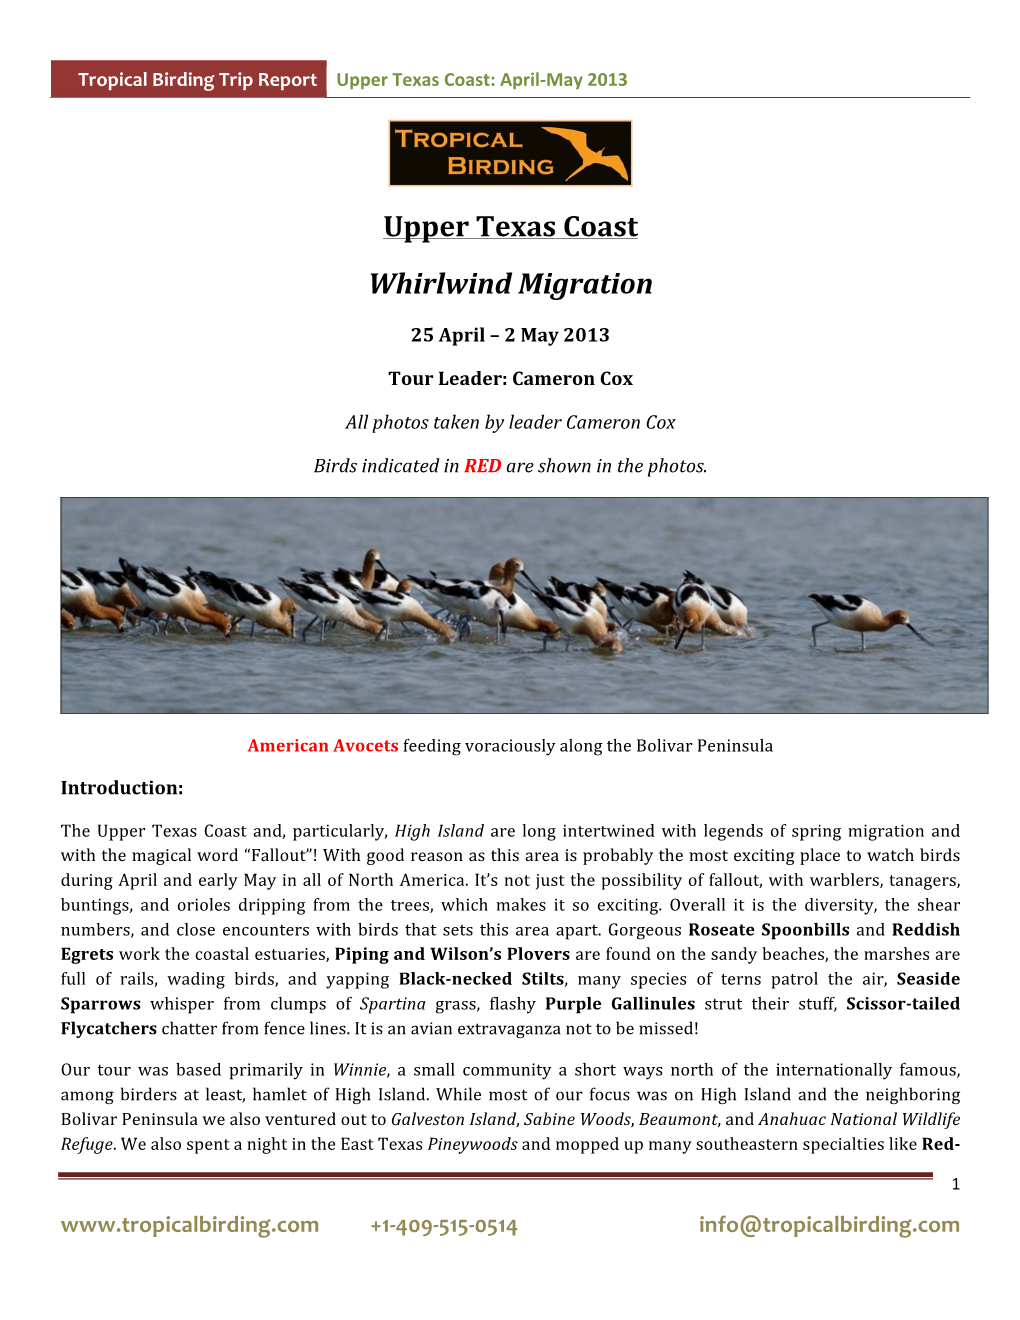 Upper Texas Coast Whirlwind Migration